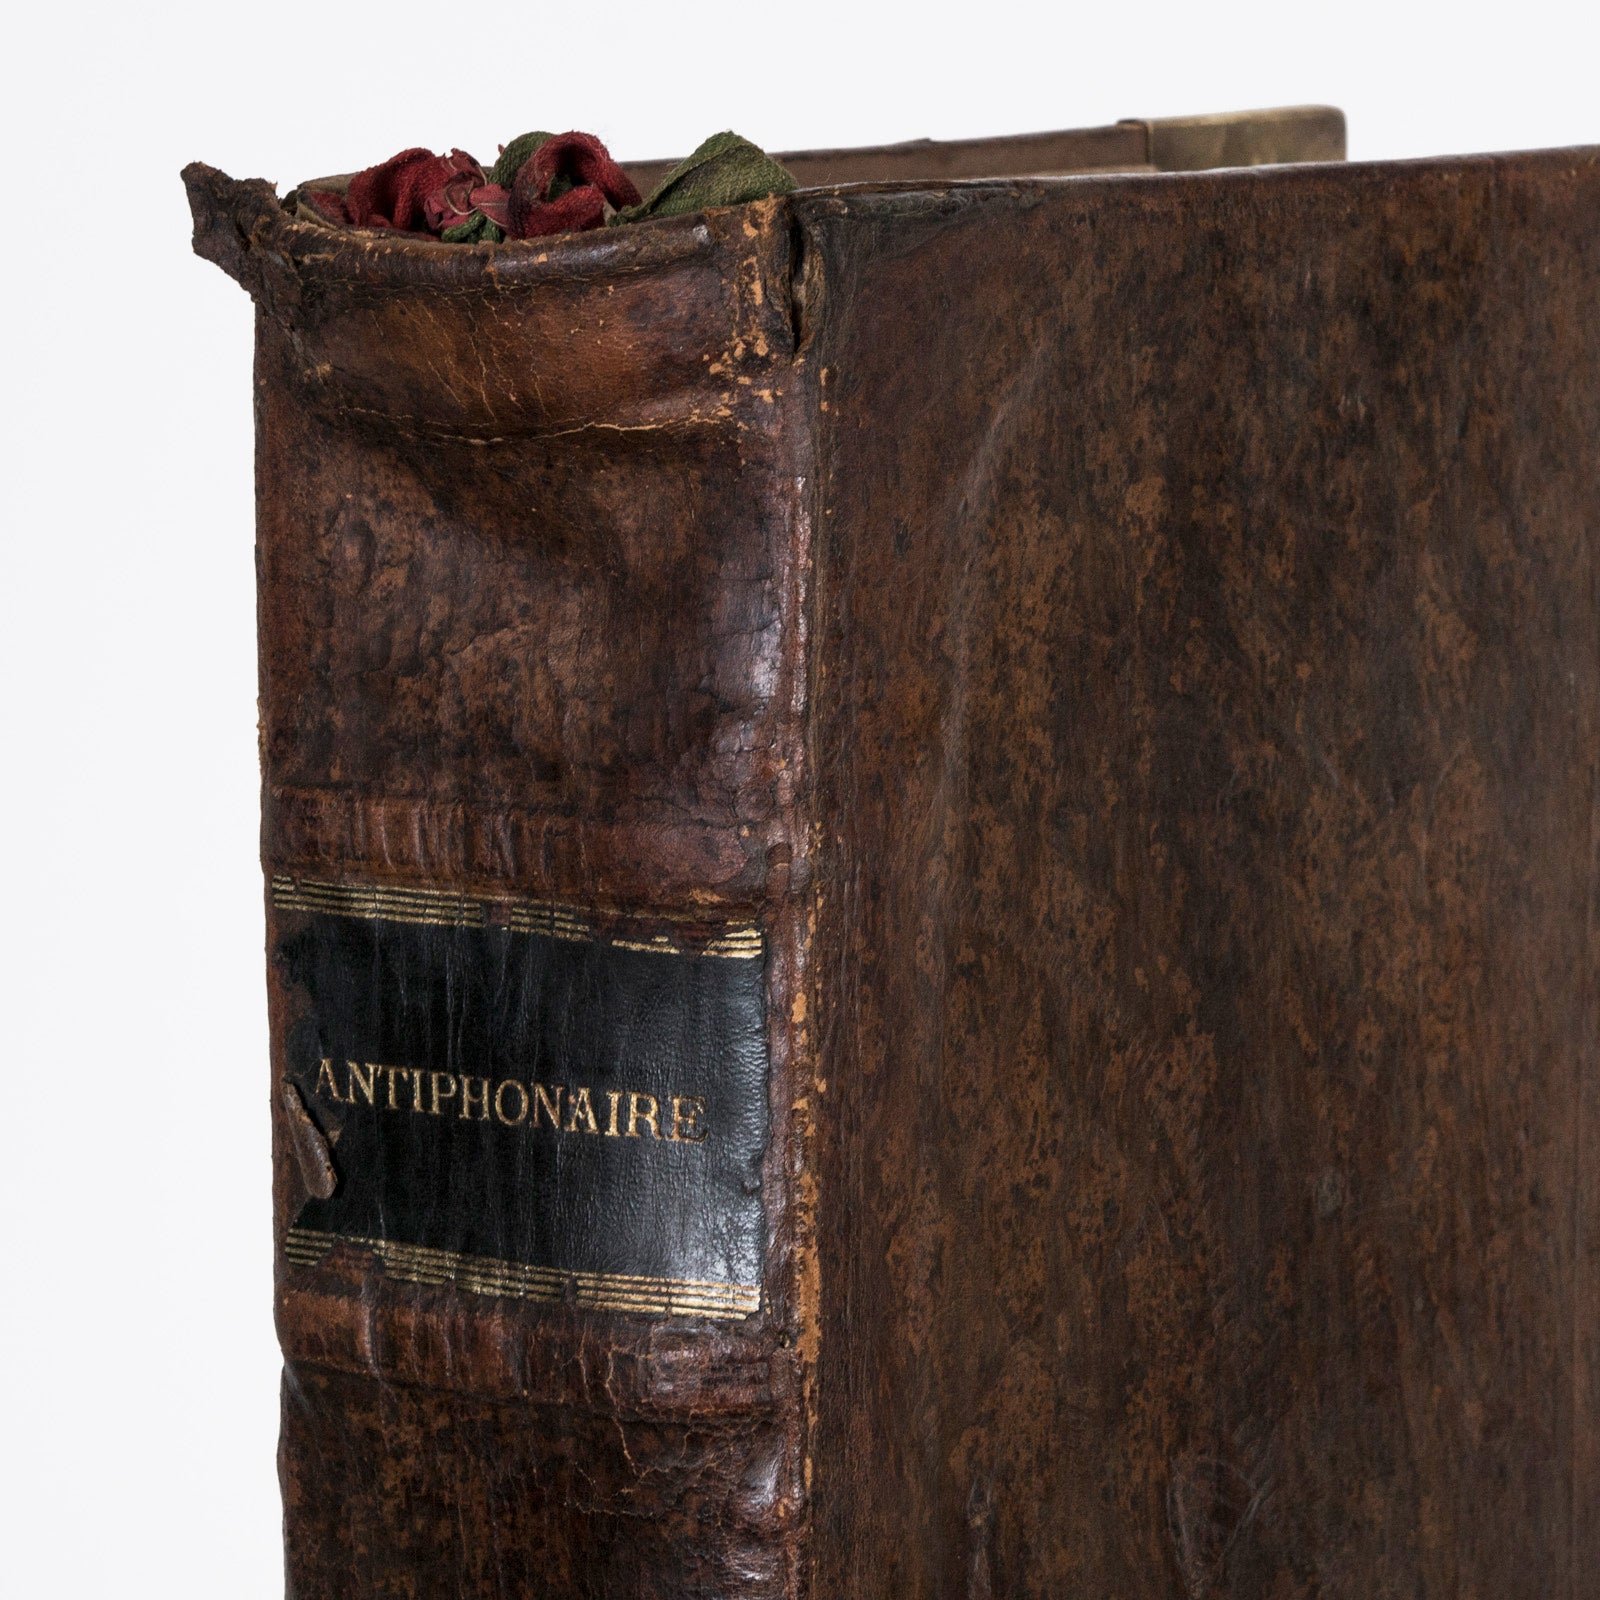 Antique Roman Sing Book "Antiphonaire"